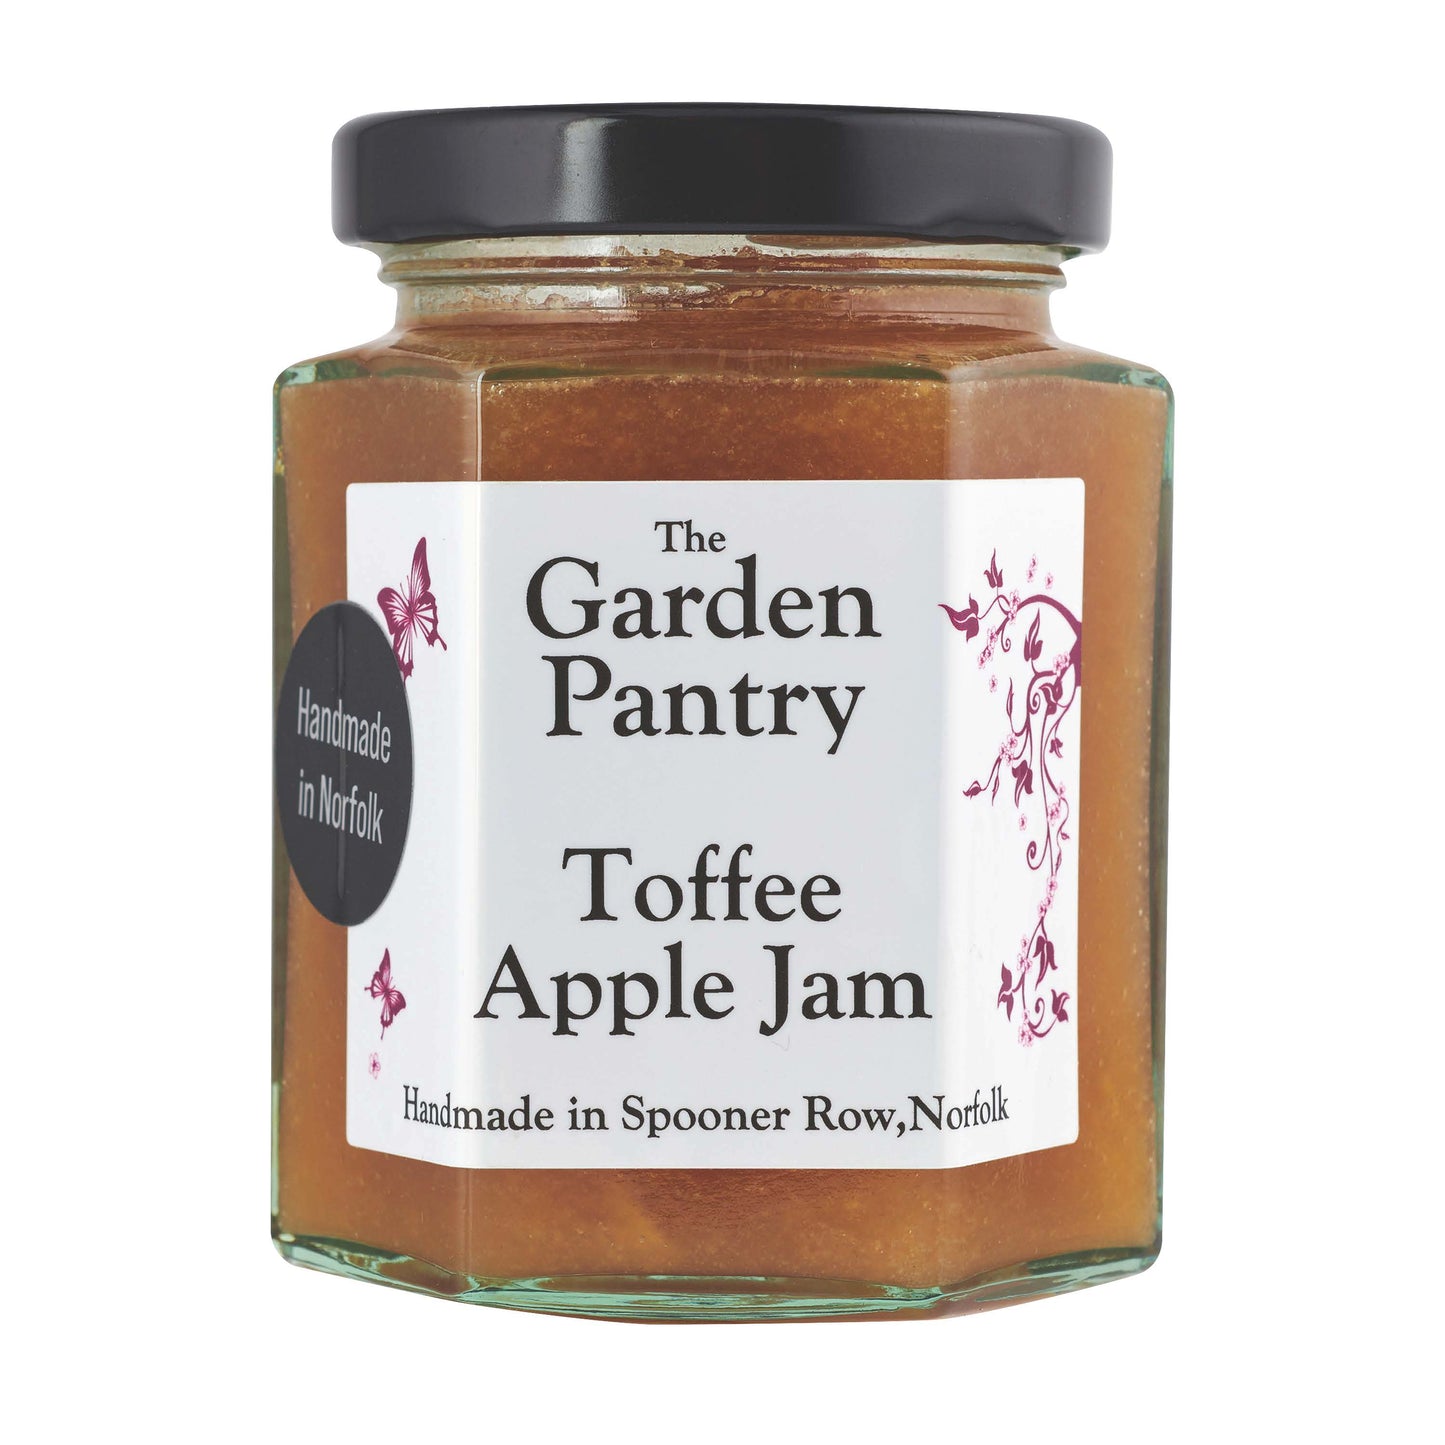 The Garden Pantry Toffee Apple Jam